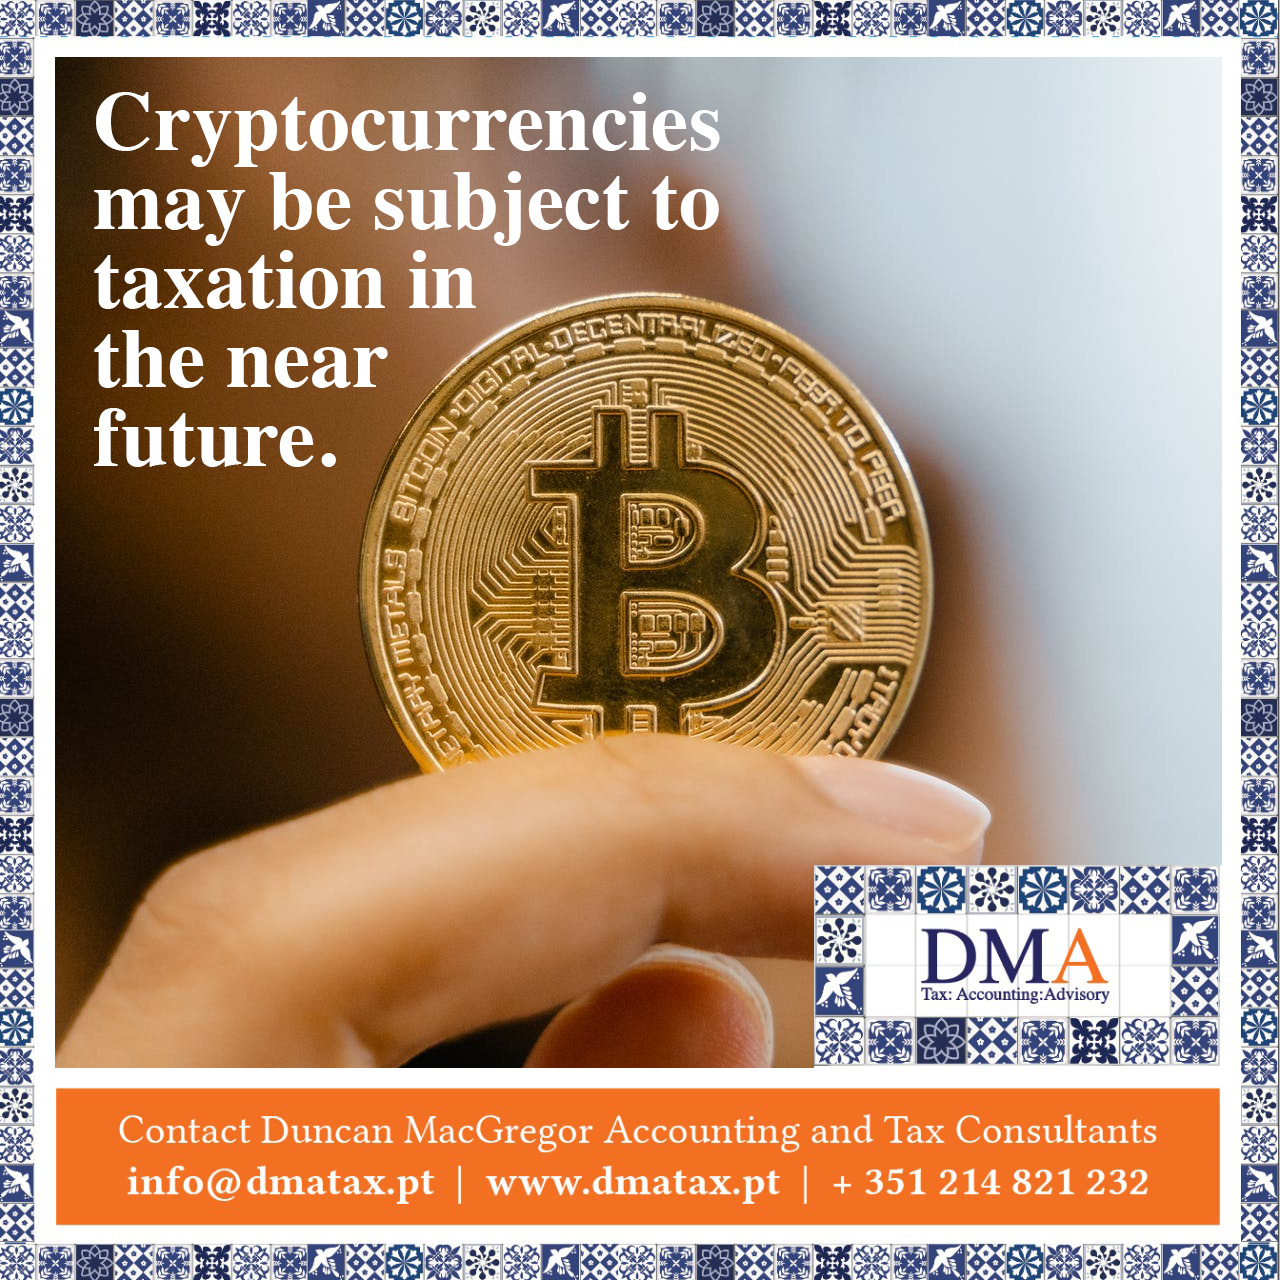 DMA Tax Accounting Advisory